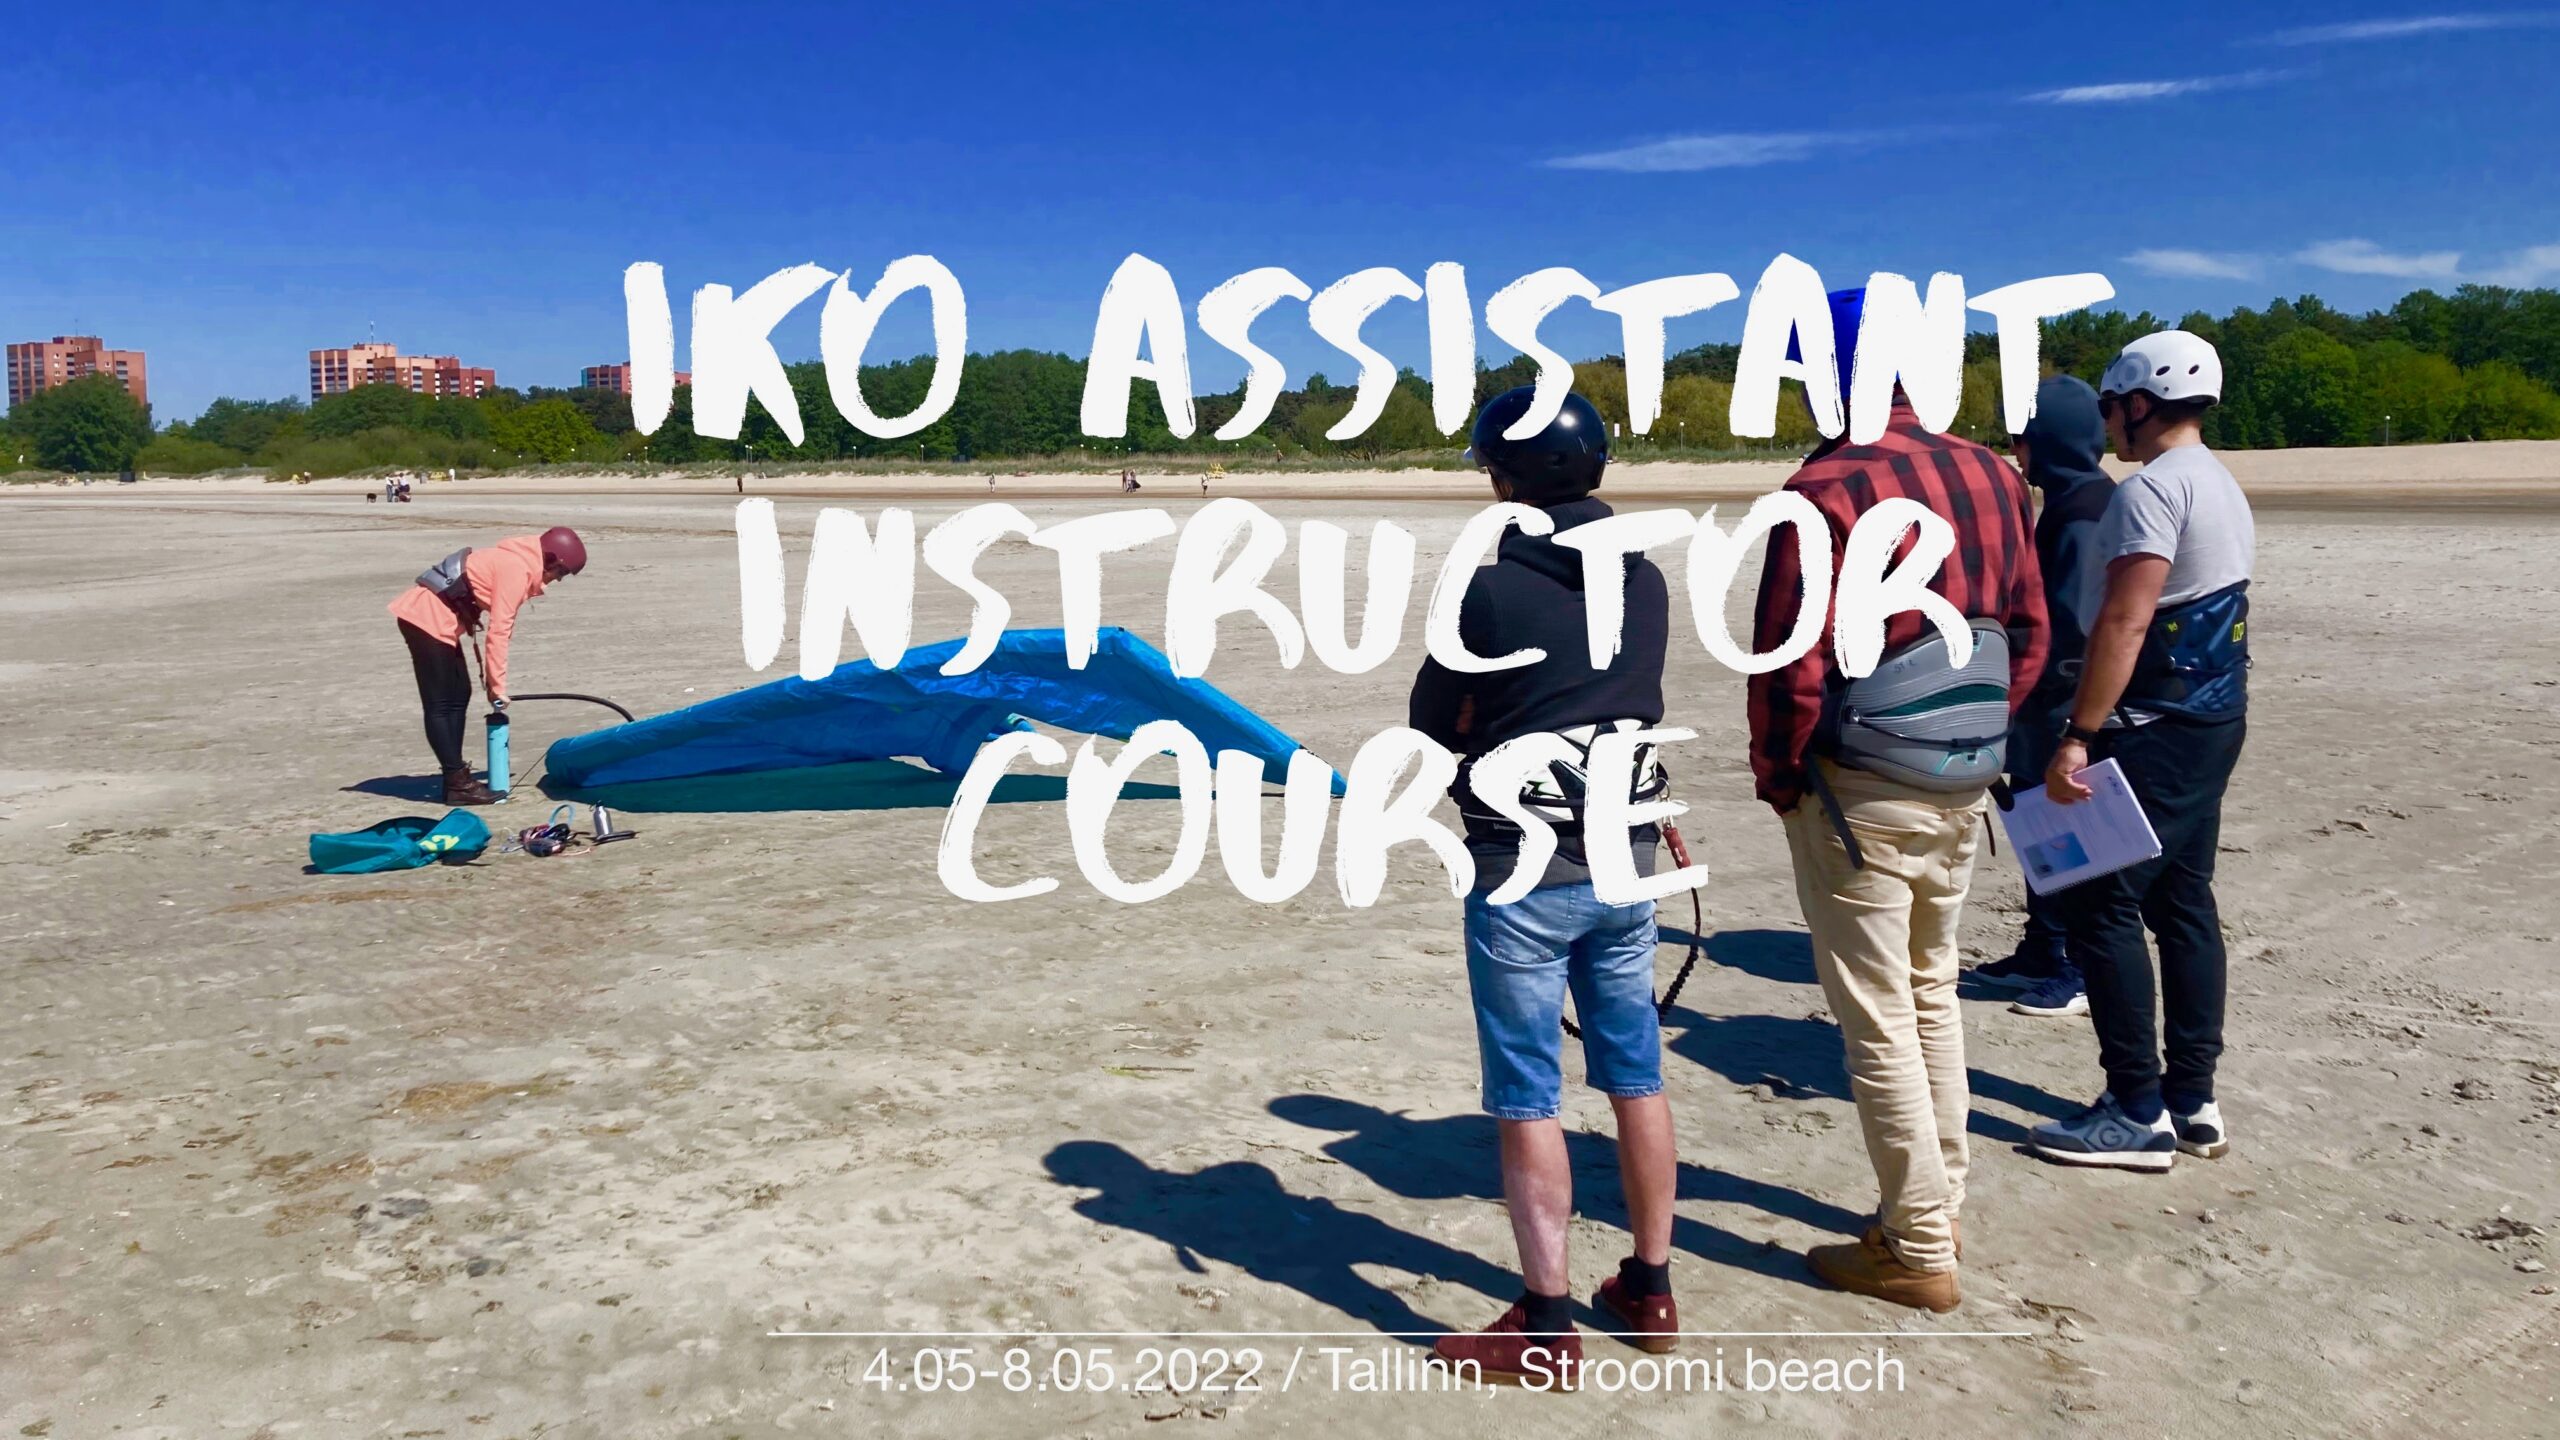 IKO Assistant instruktor kursus